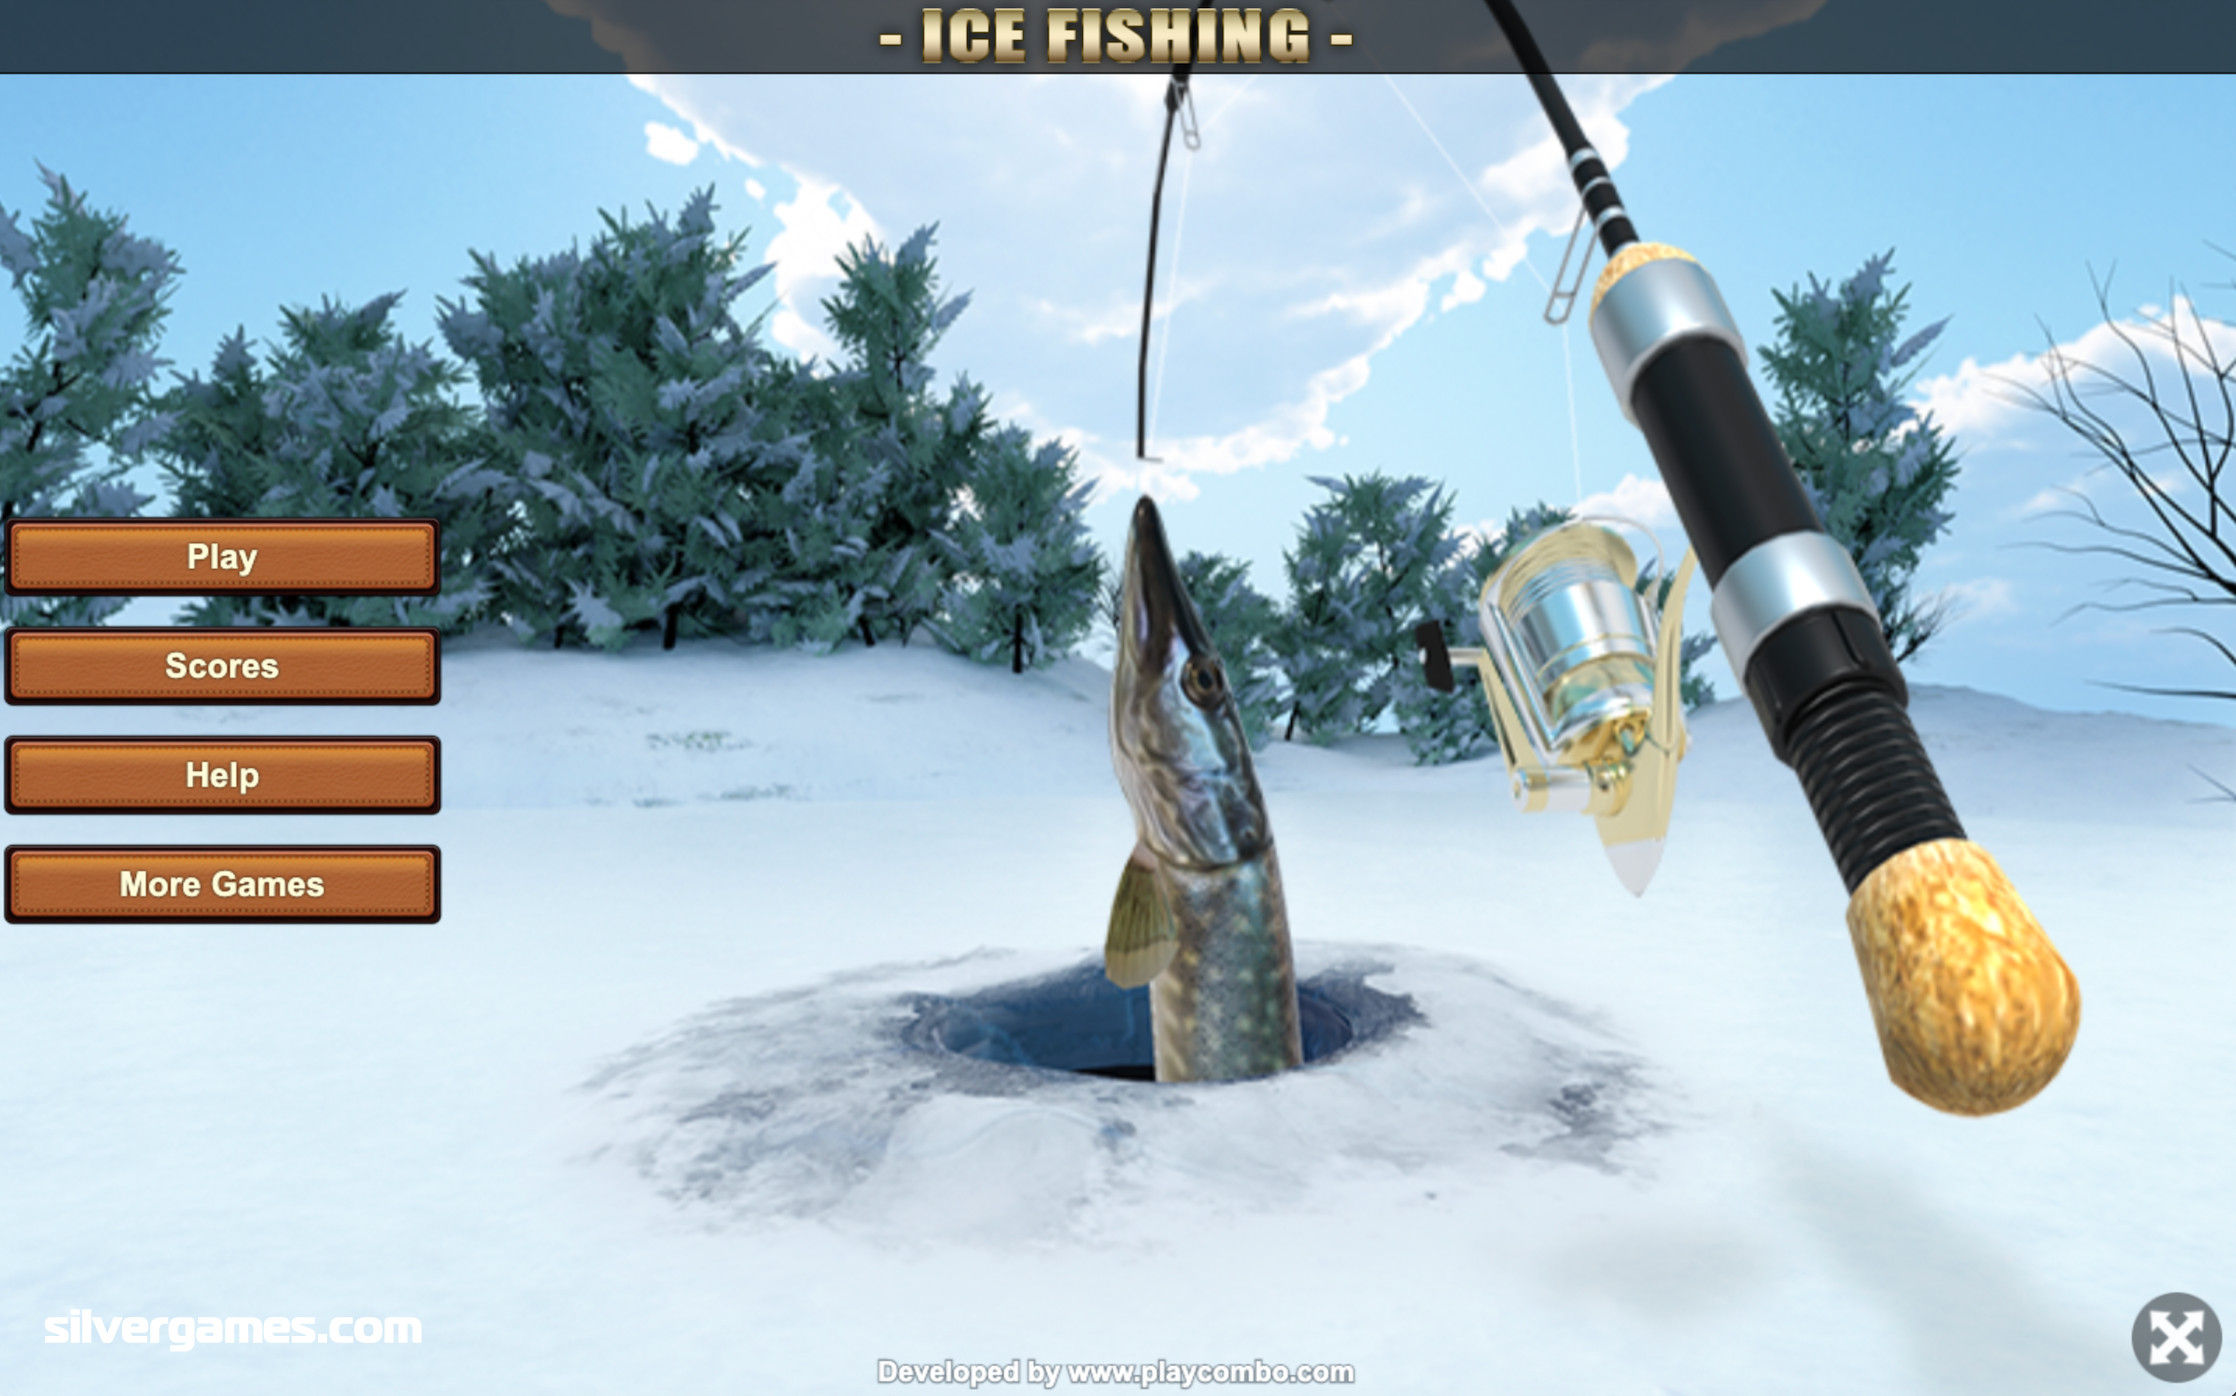 https://a.silvergames.com/screenshots/ice-fishing/1_menu.jpg